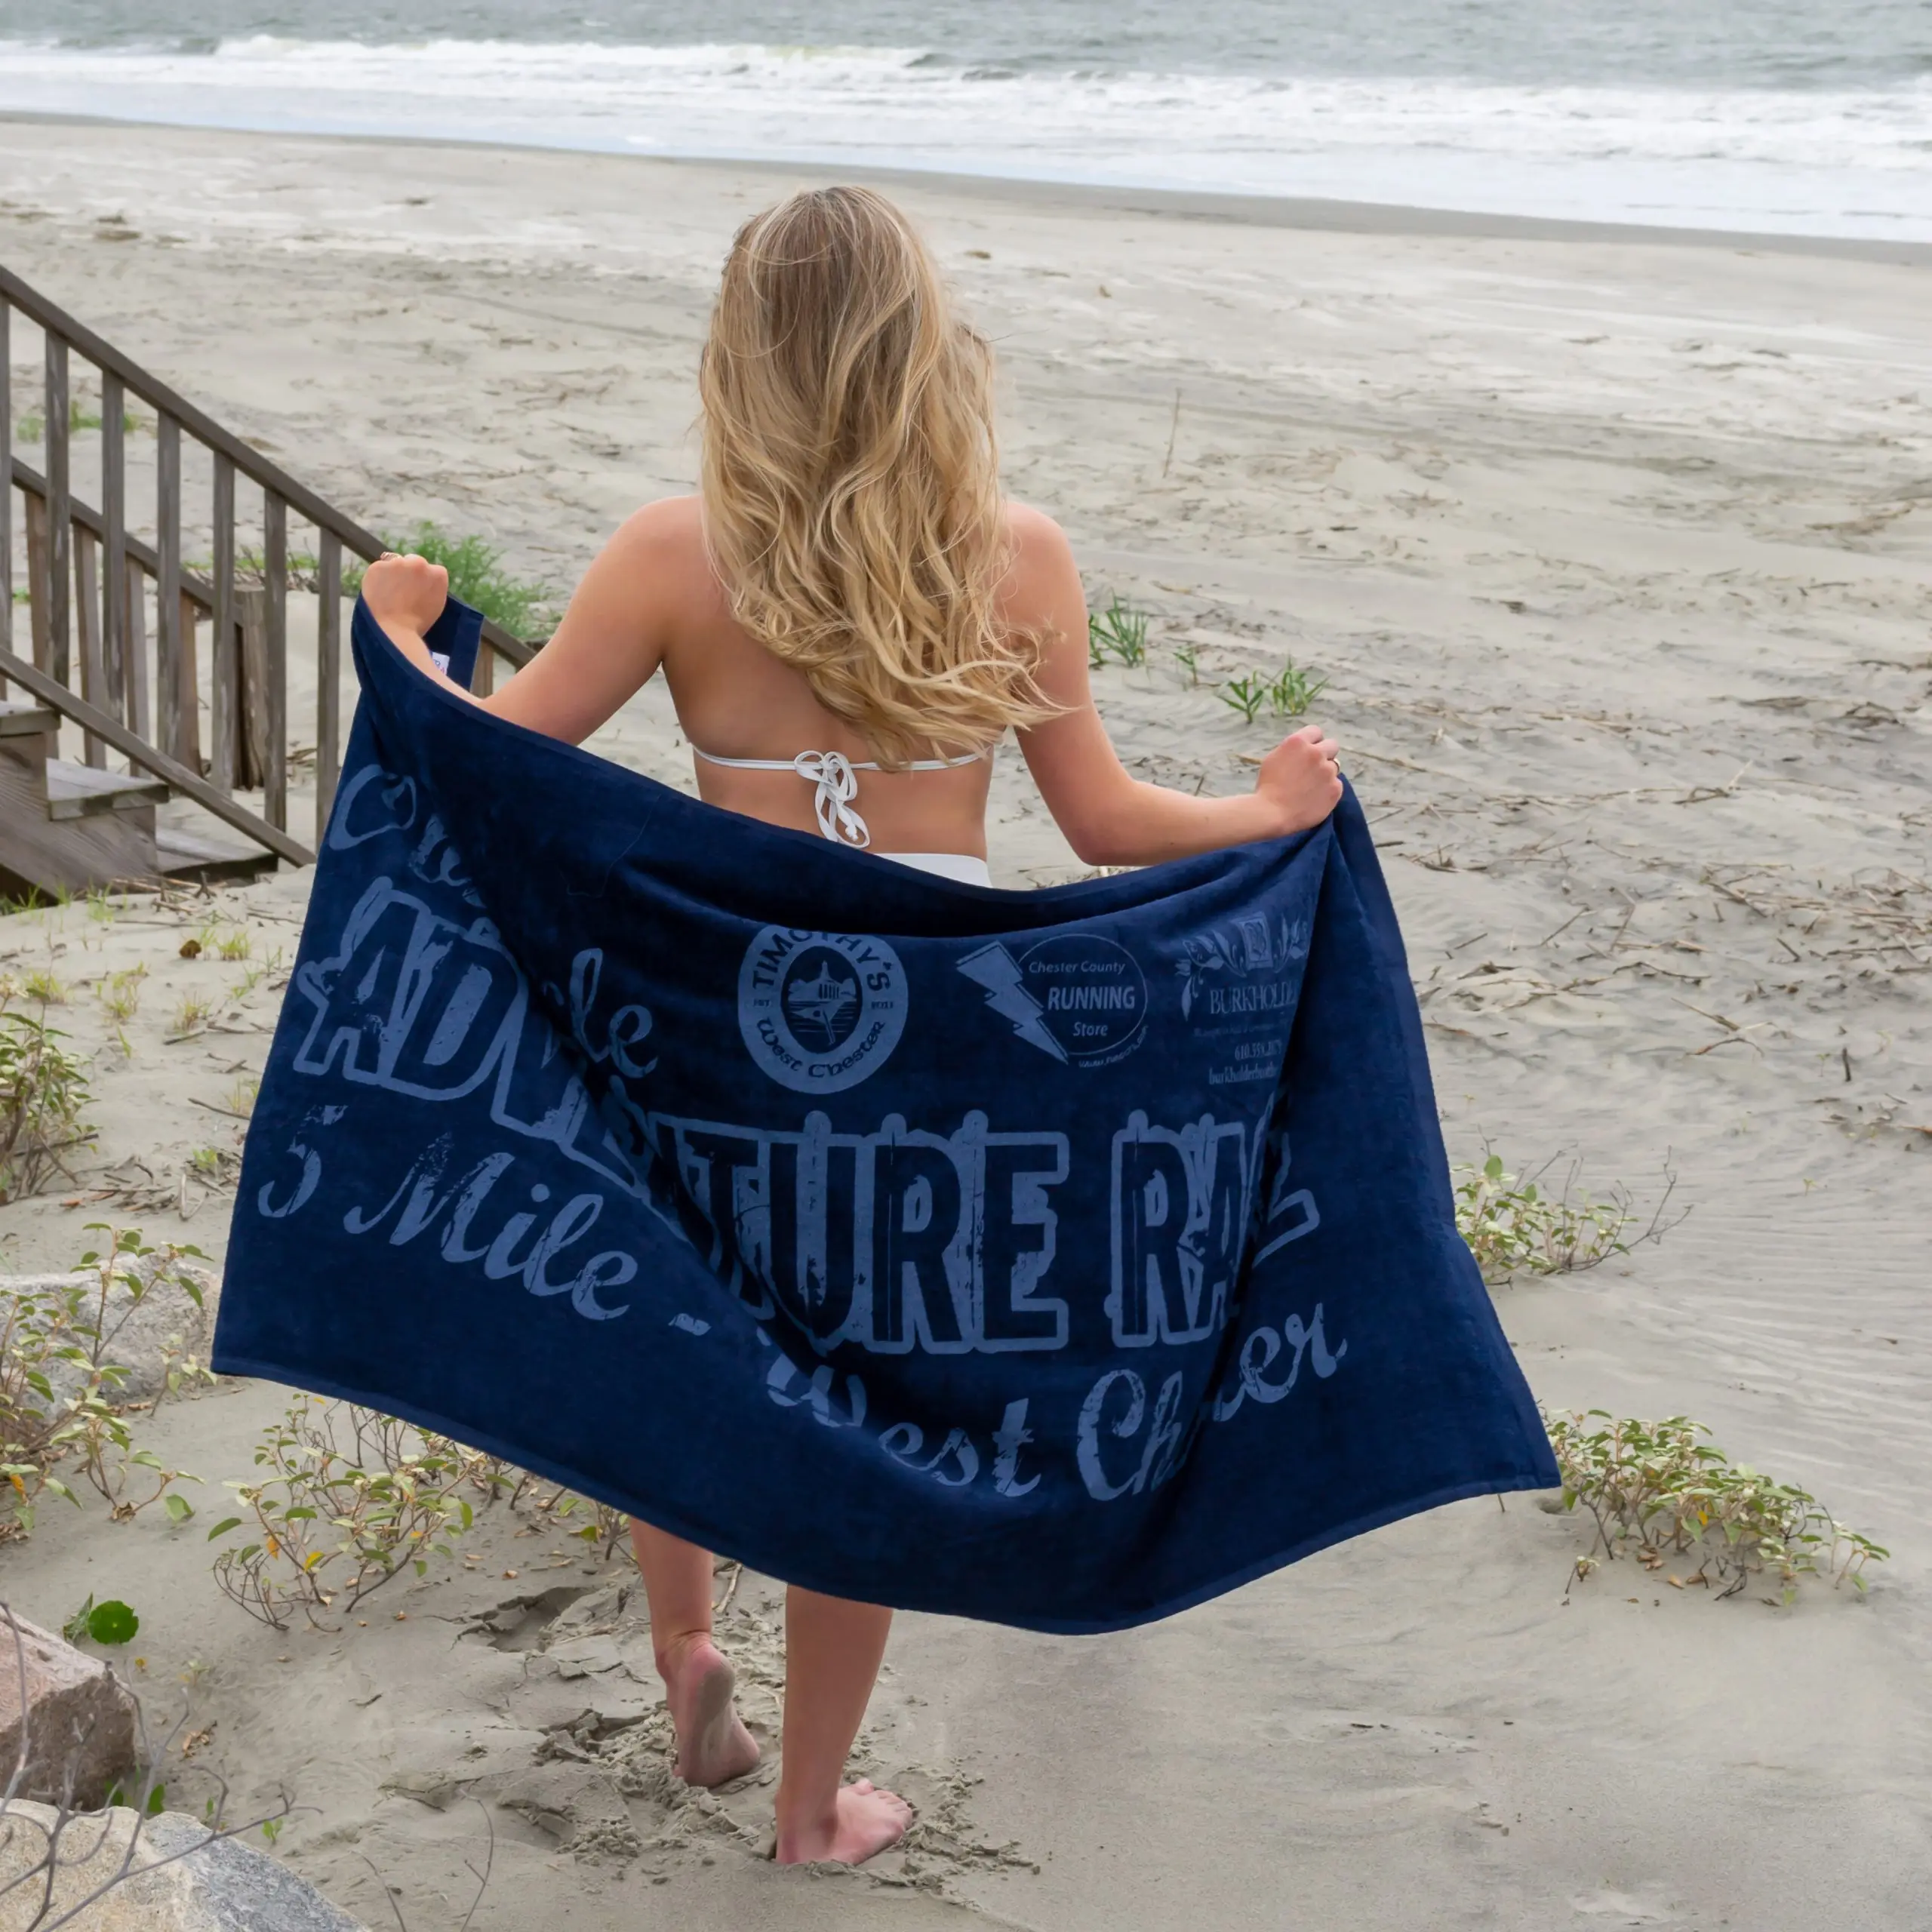 jacquard logo bath towel embossed custom color beach towel with embossed logo